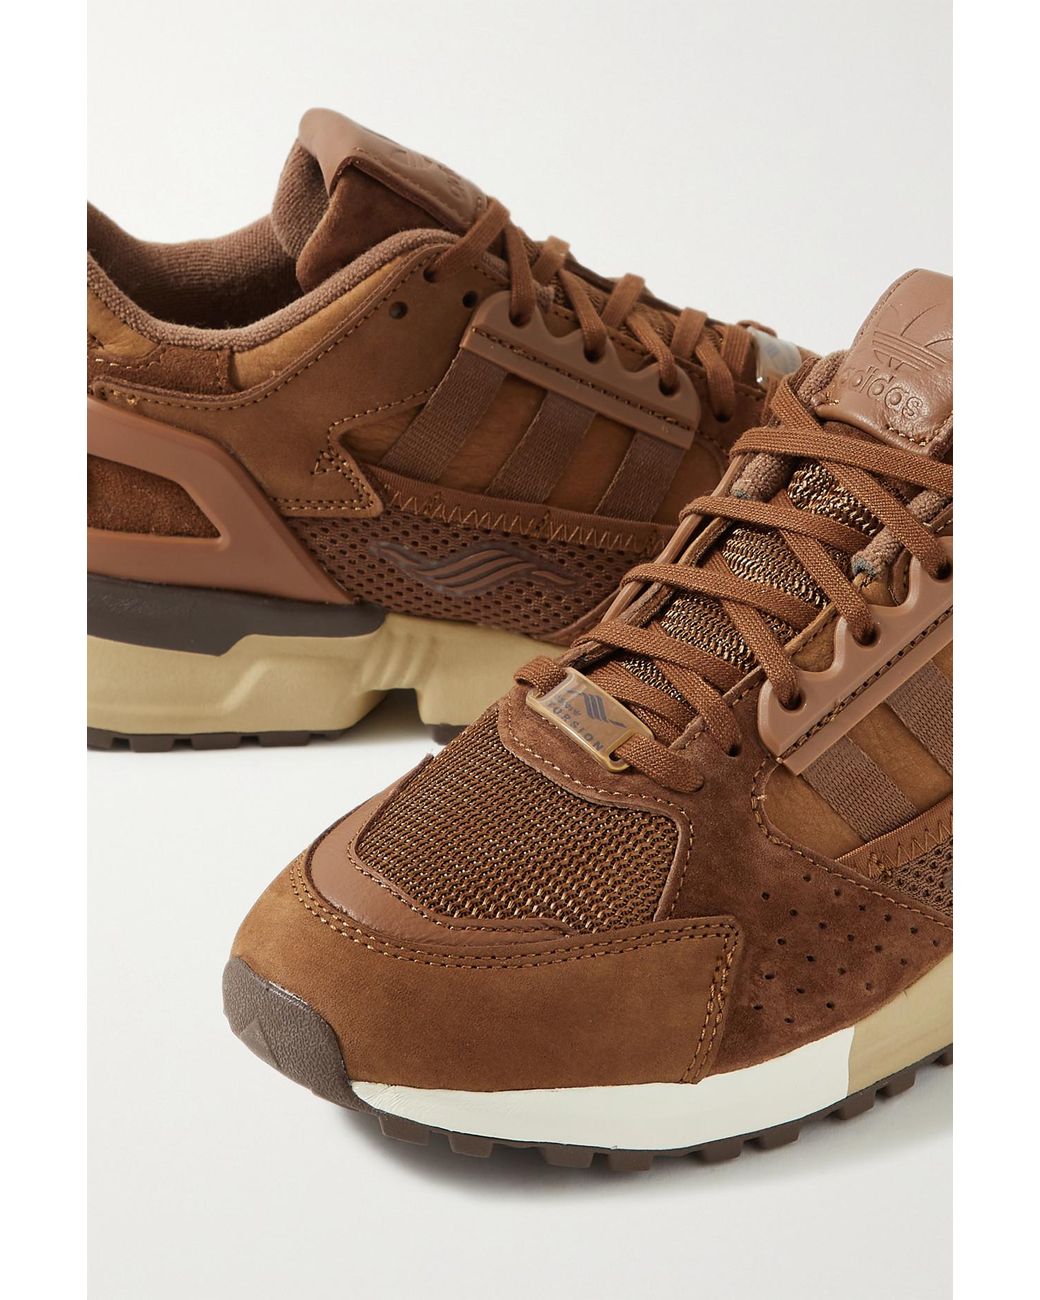 adidas Originals Zx 10,000 C Schokohase Mesh And Suede Sneakers in Brown |  Lyst